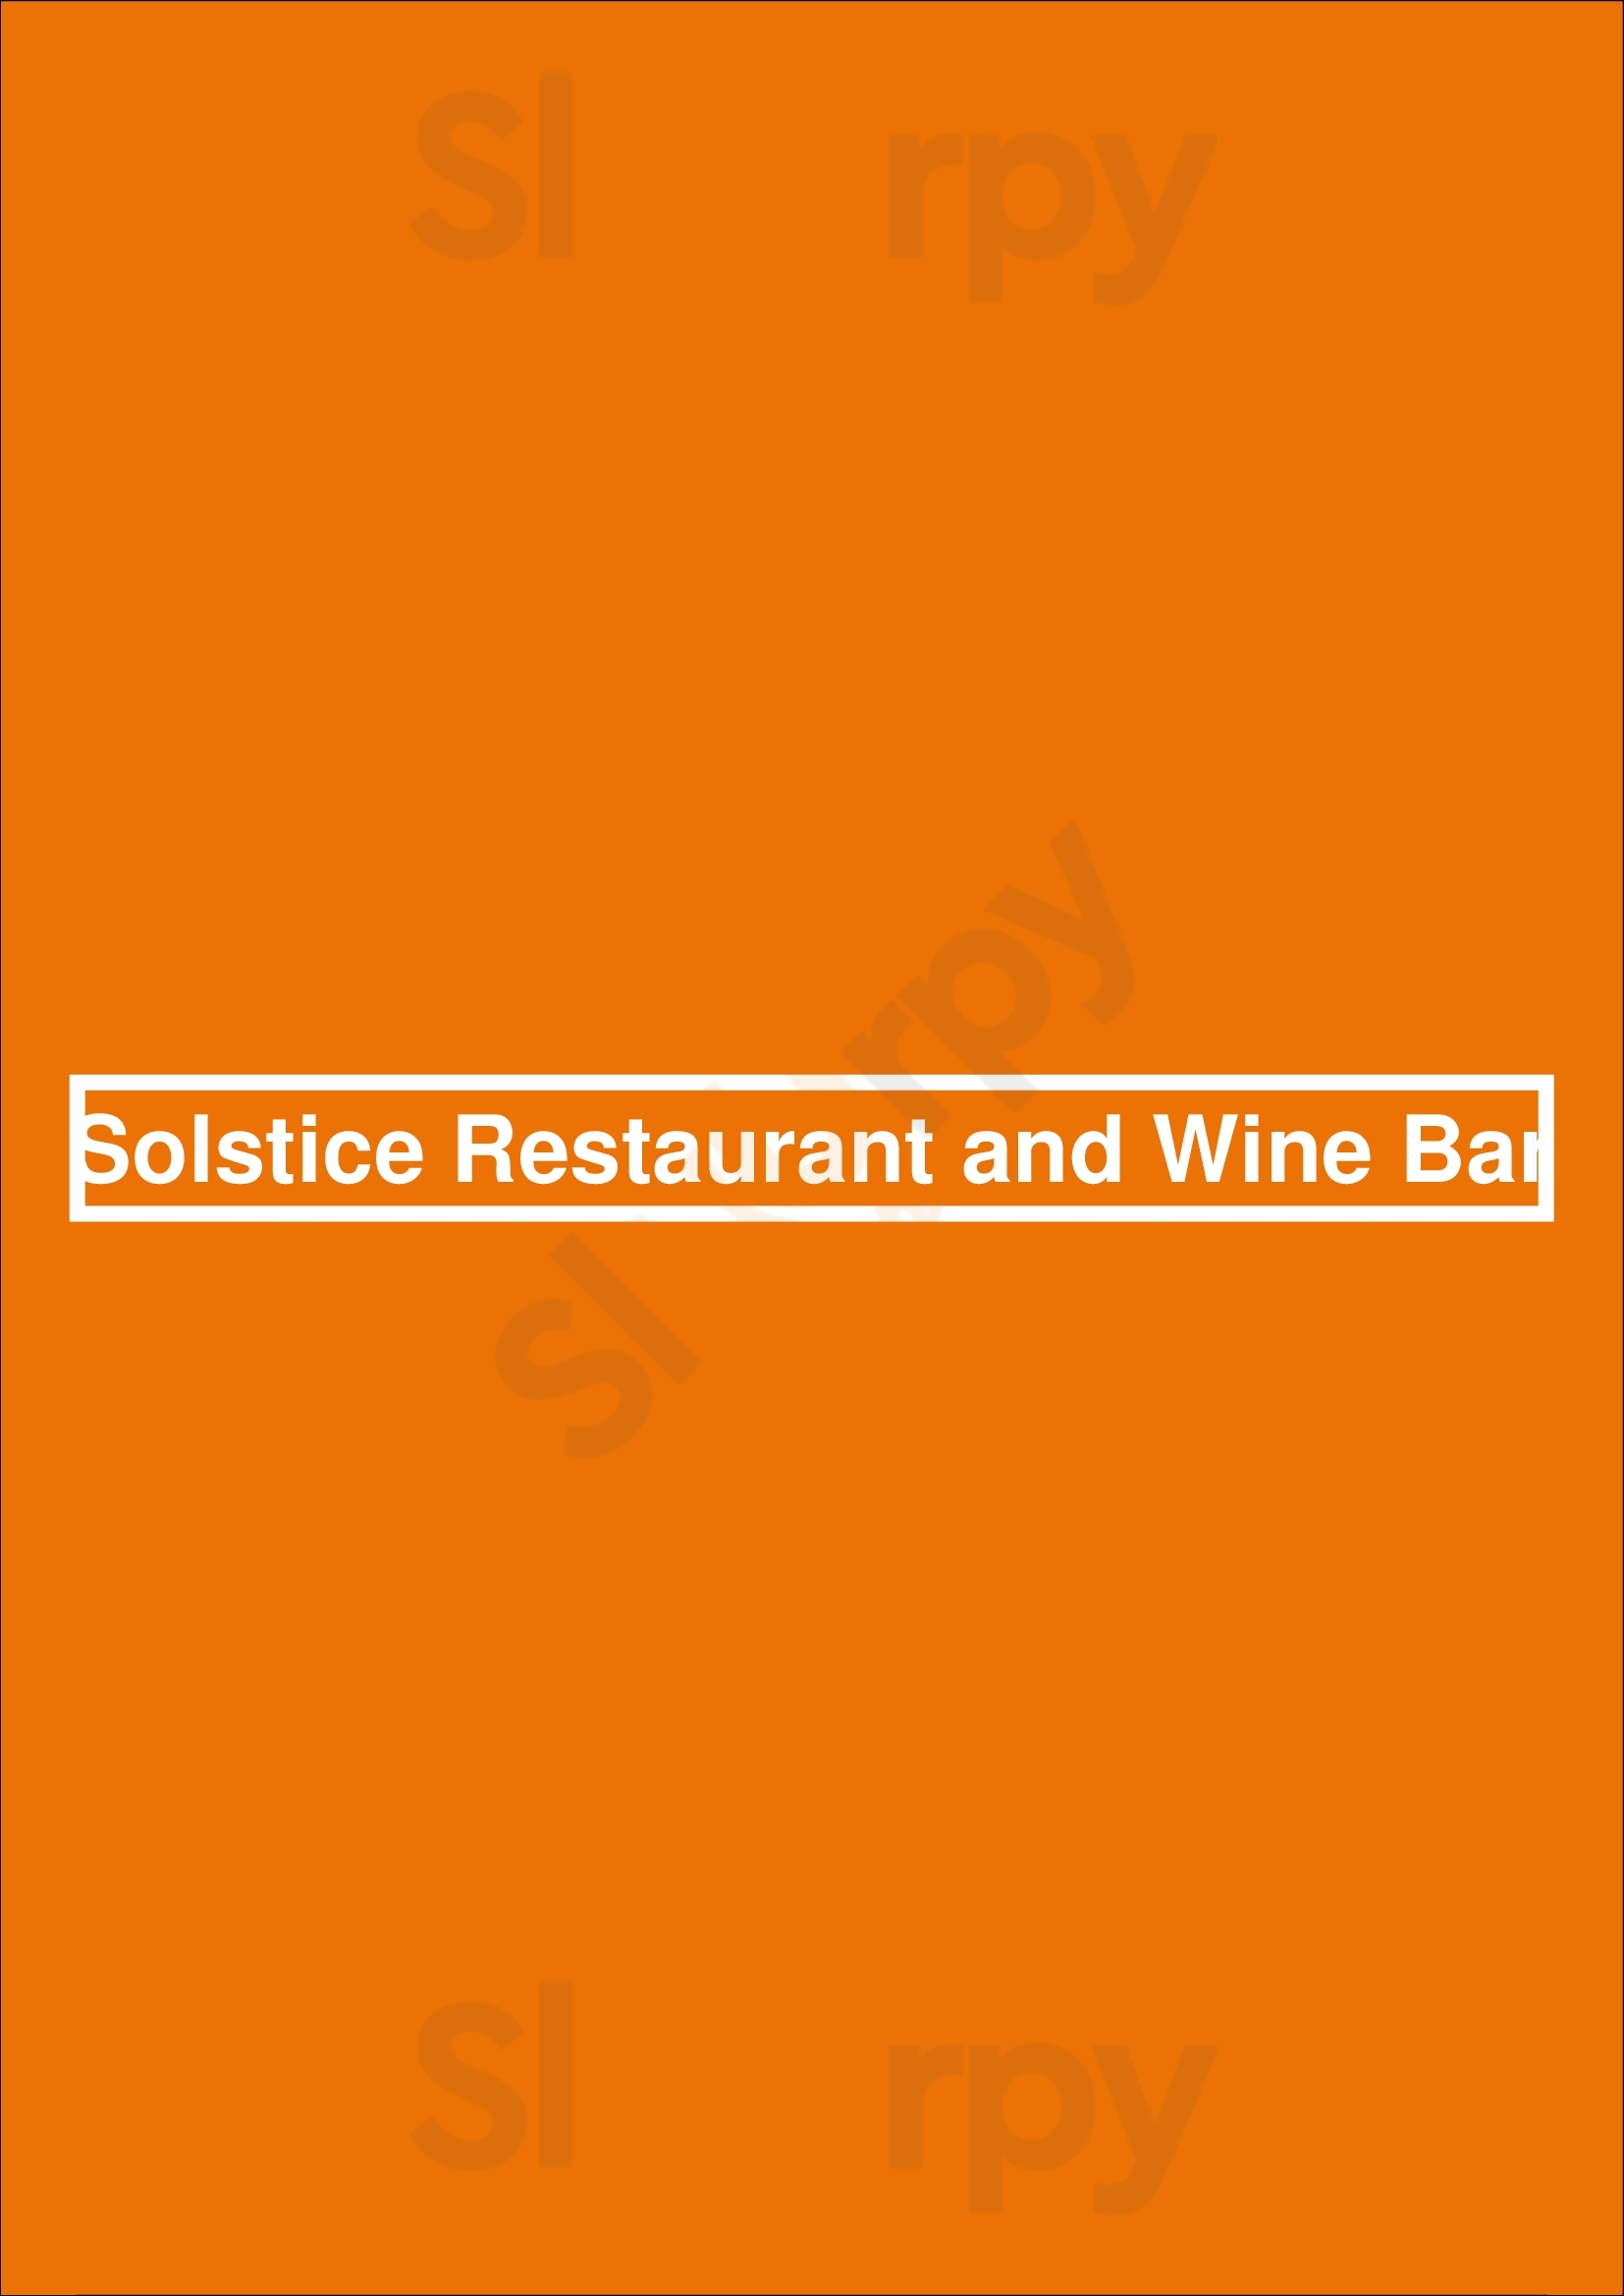 Solstice Restaurant And Wine Bar Mississauga Menu - 1